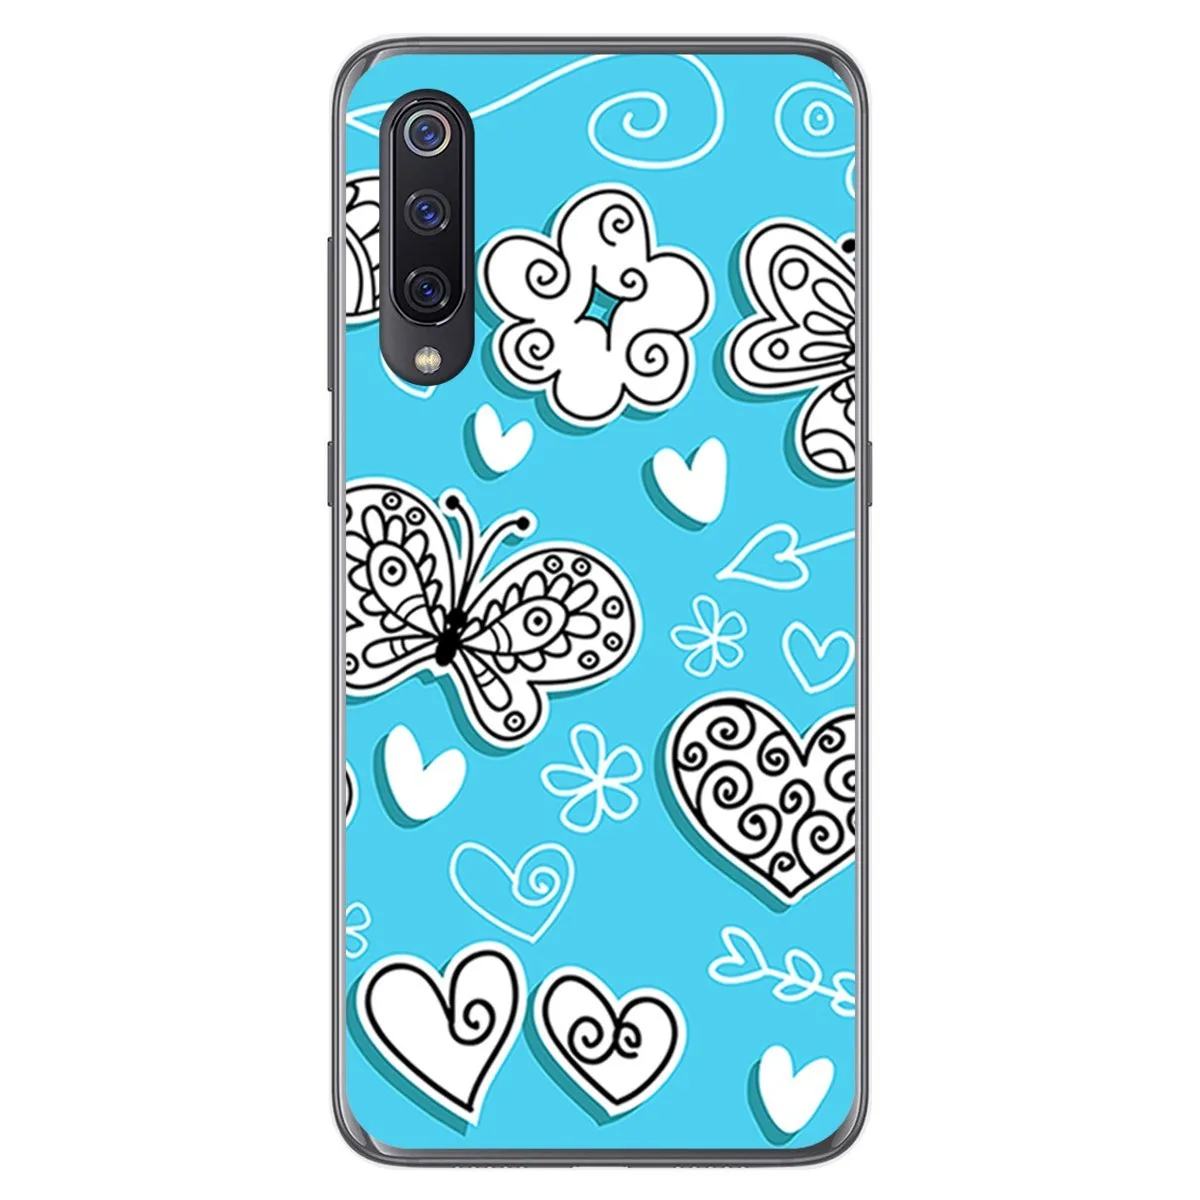 Funda Gel Tpu para Xiaomi Mi 9 diseño Mariposas Dibujos